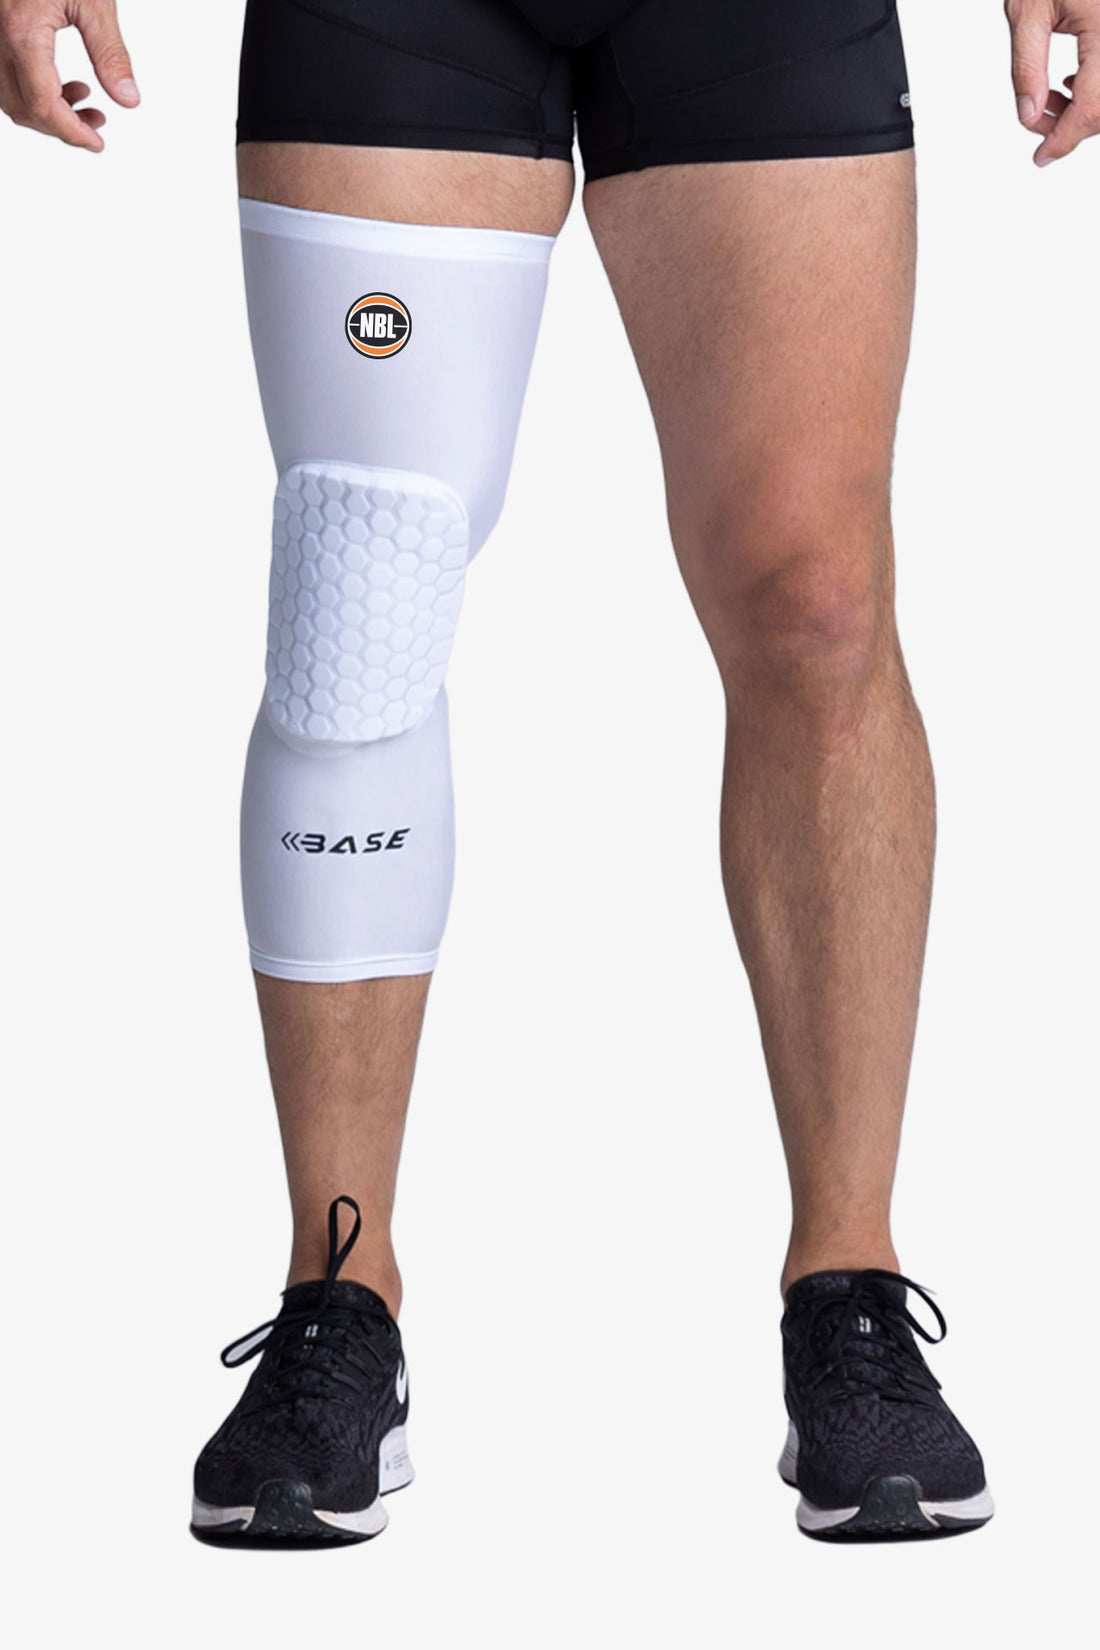 Padded Crashproof Basketball Knee Pads 6 Color SP012  Basketball knee pads,  Basketball knee, Compression leg sleeves